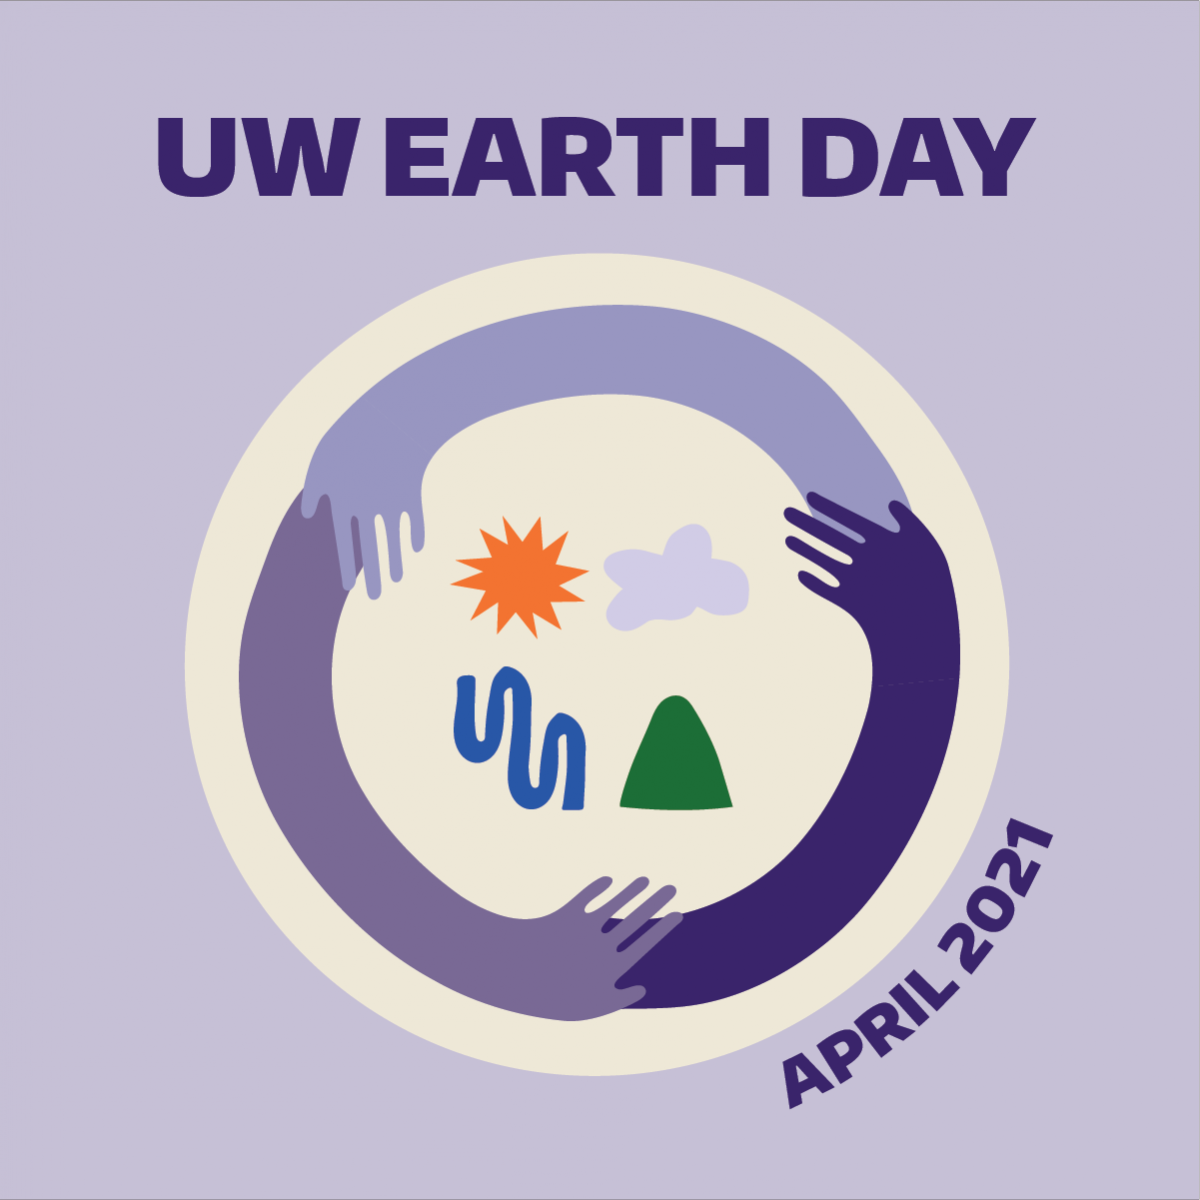 UW Earth Day logo